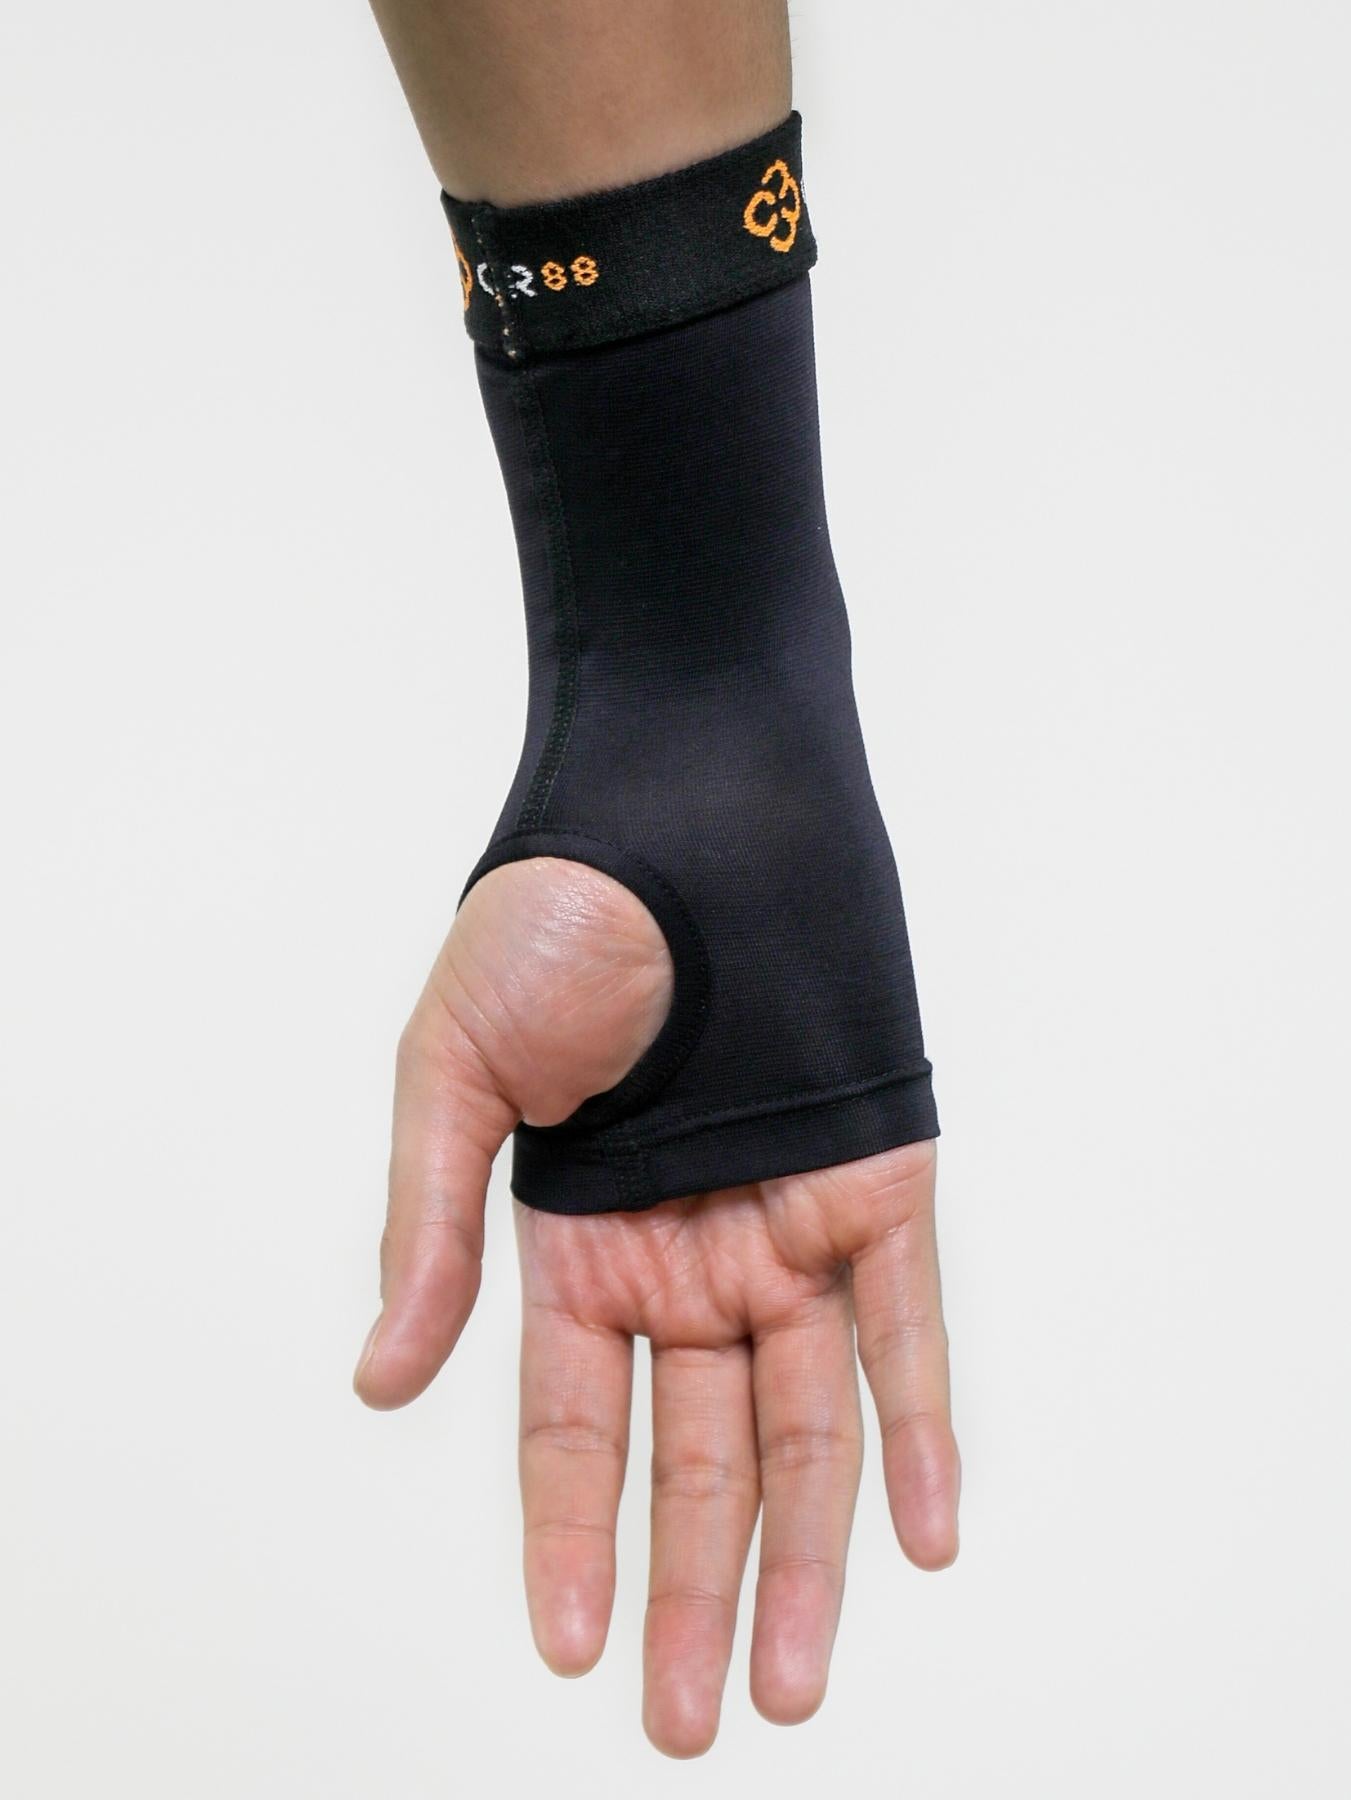 Thx4 Copper Compression Wrist Sleeve-Copper Infused Palestine